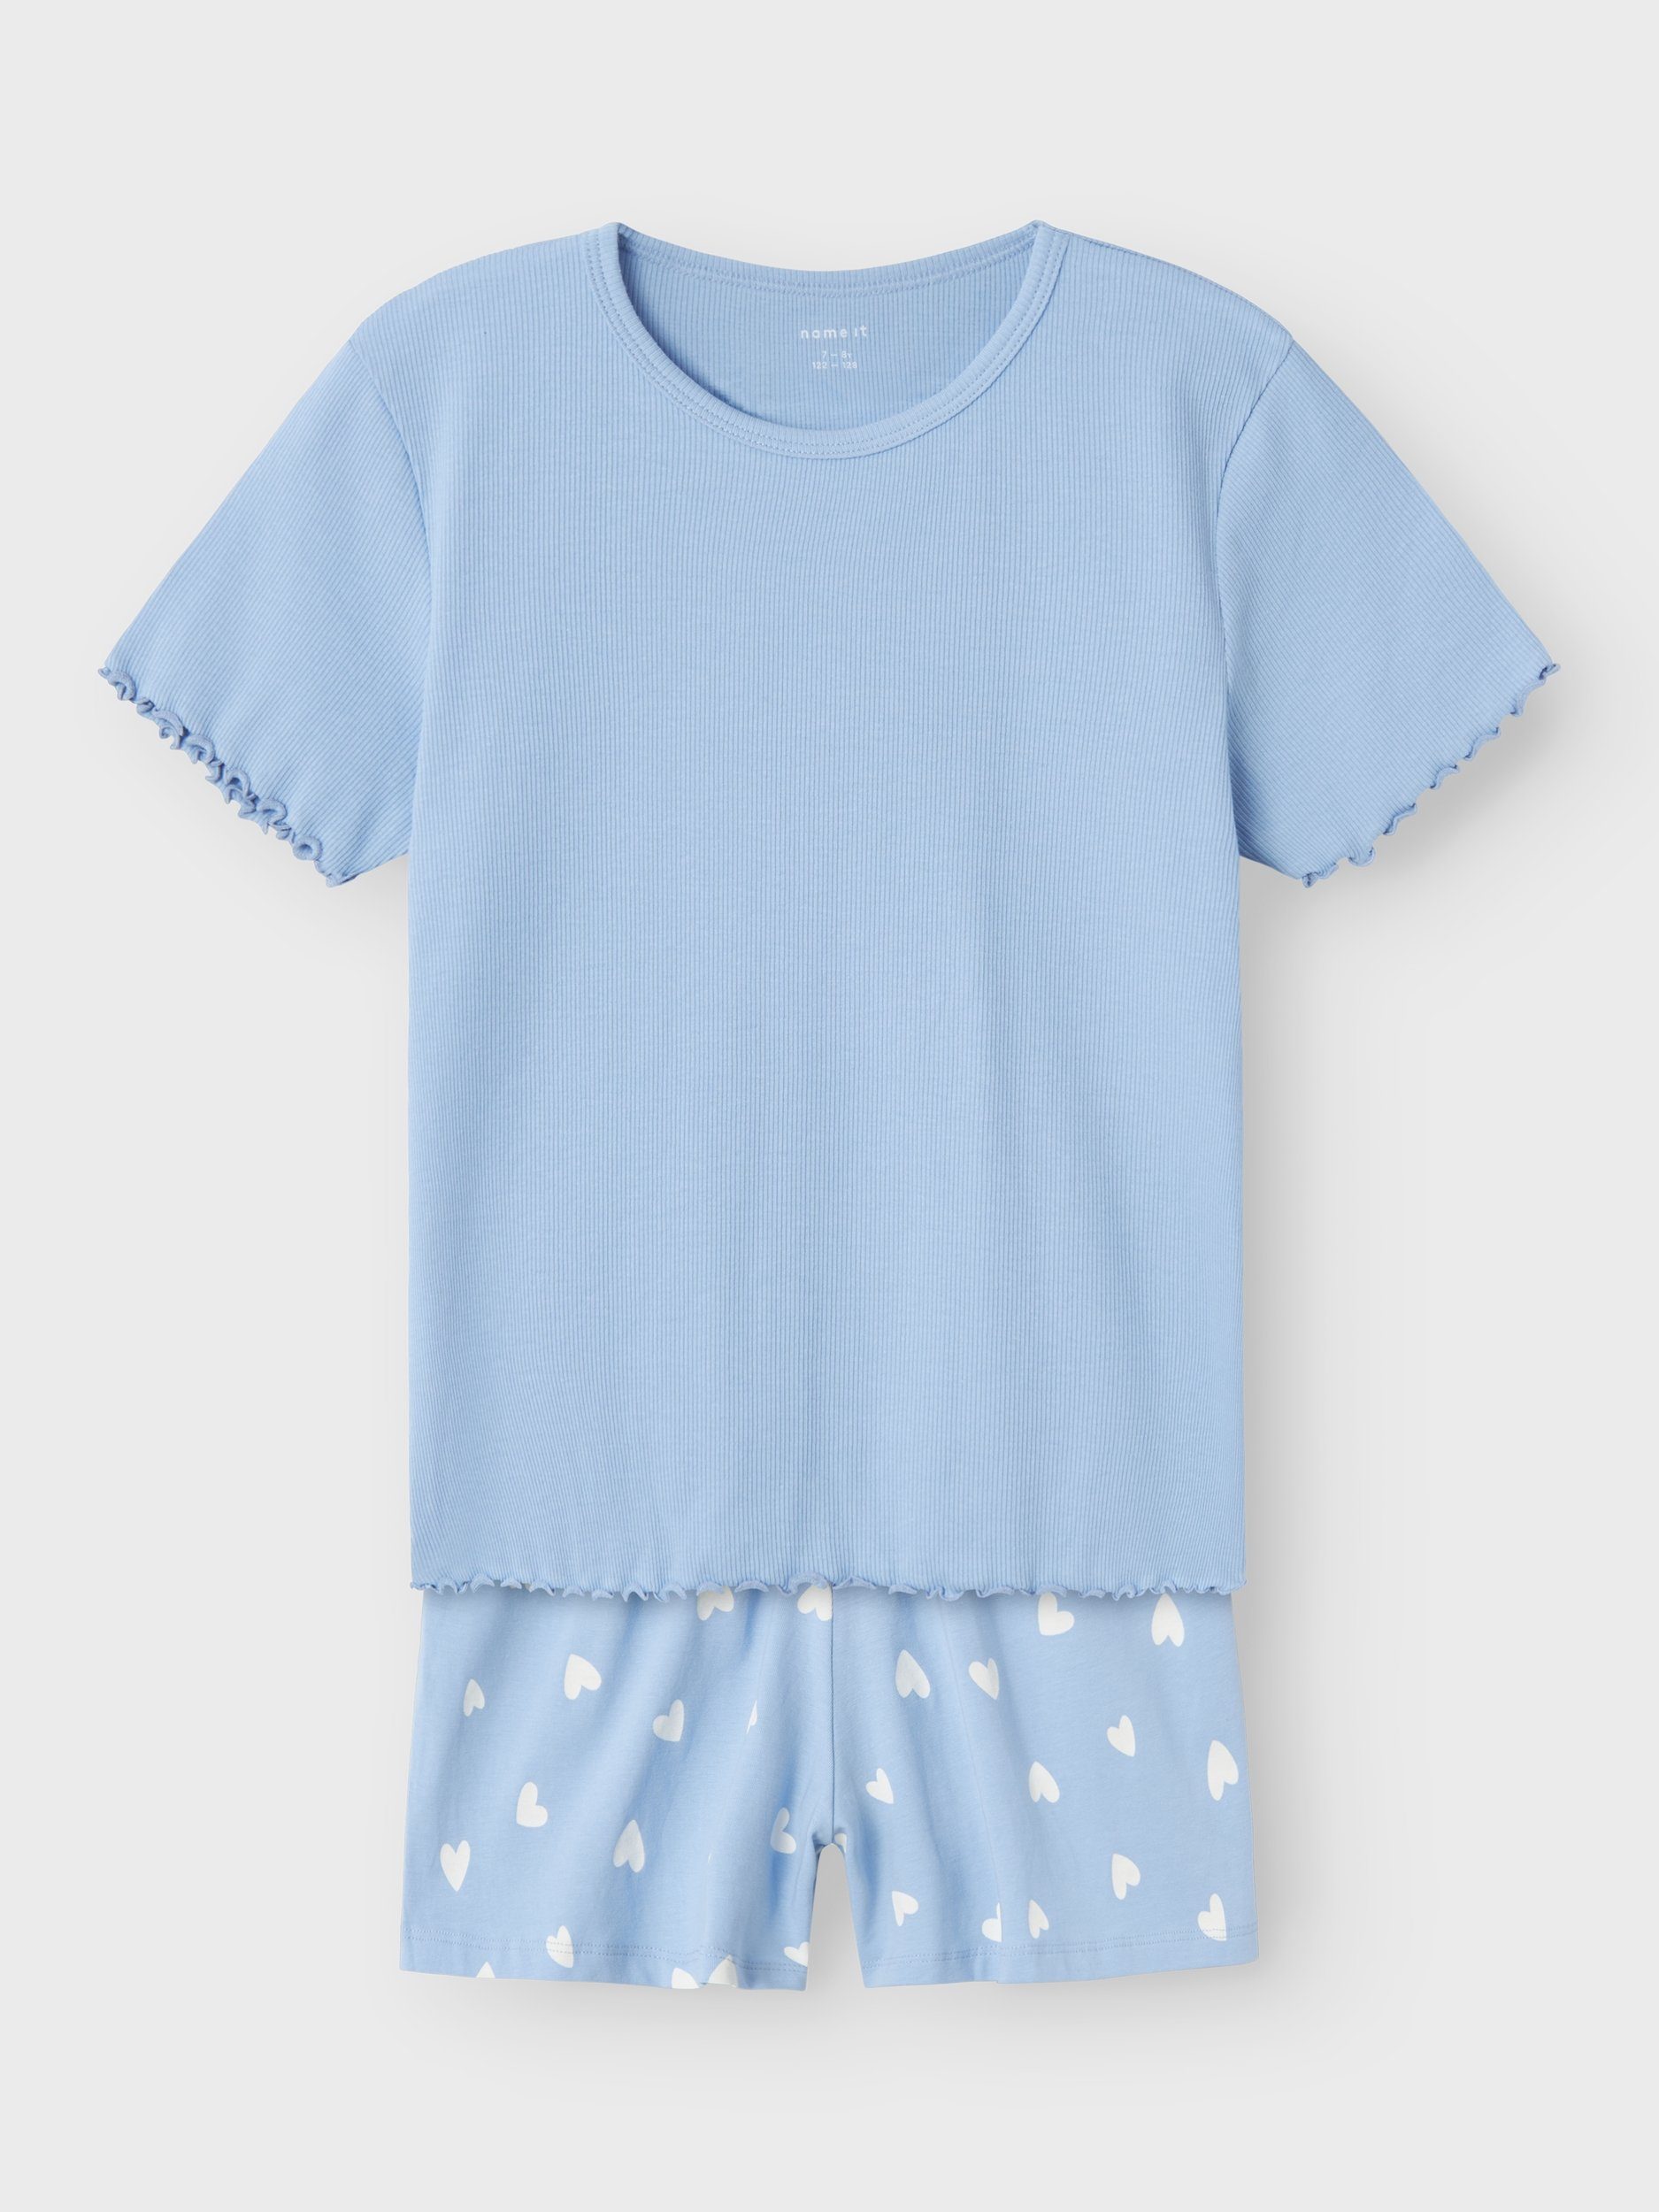 Name It Pyjama (set, 2-delig)